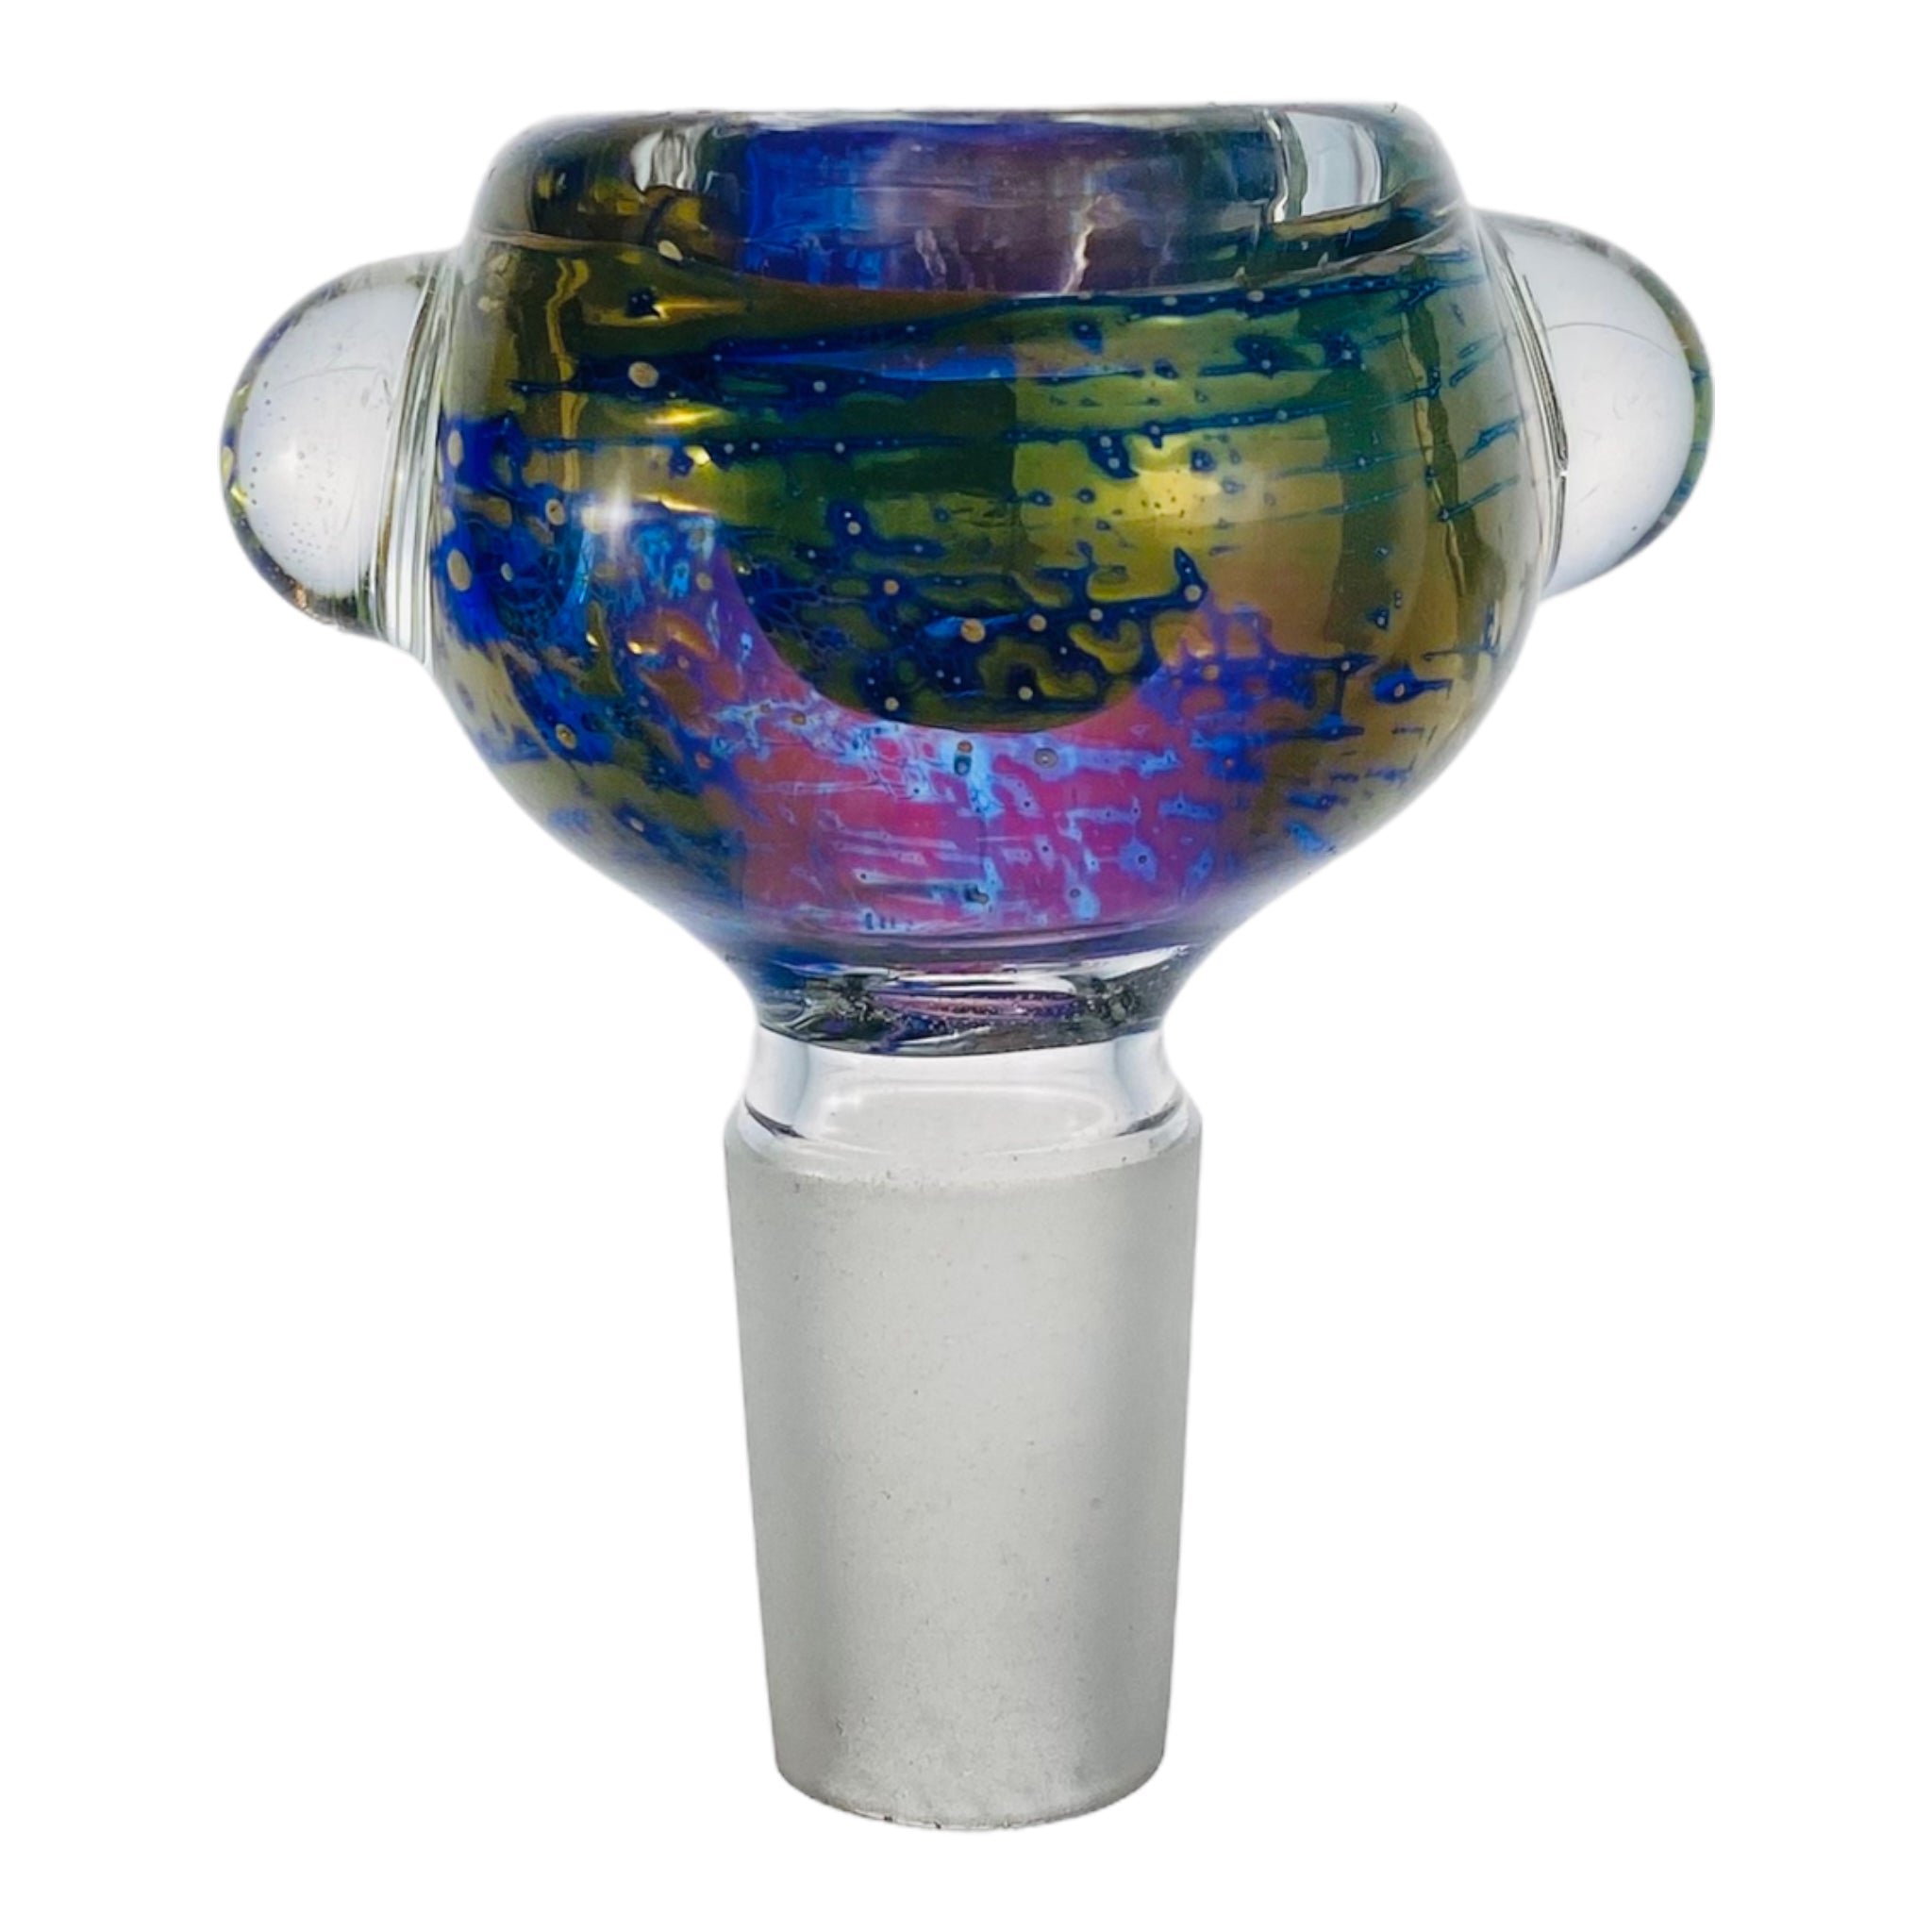 18mm Flower Bowl - Space Fuming Over Blue Glass OG Push Bong Bowl Piece